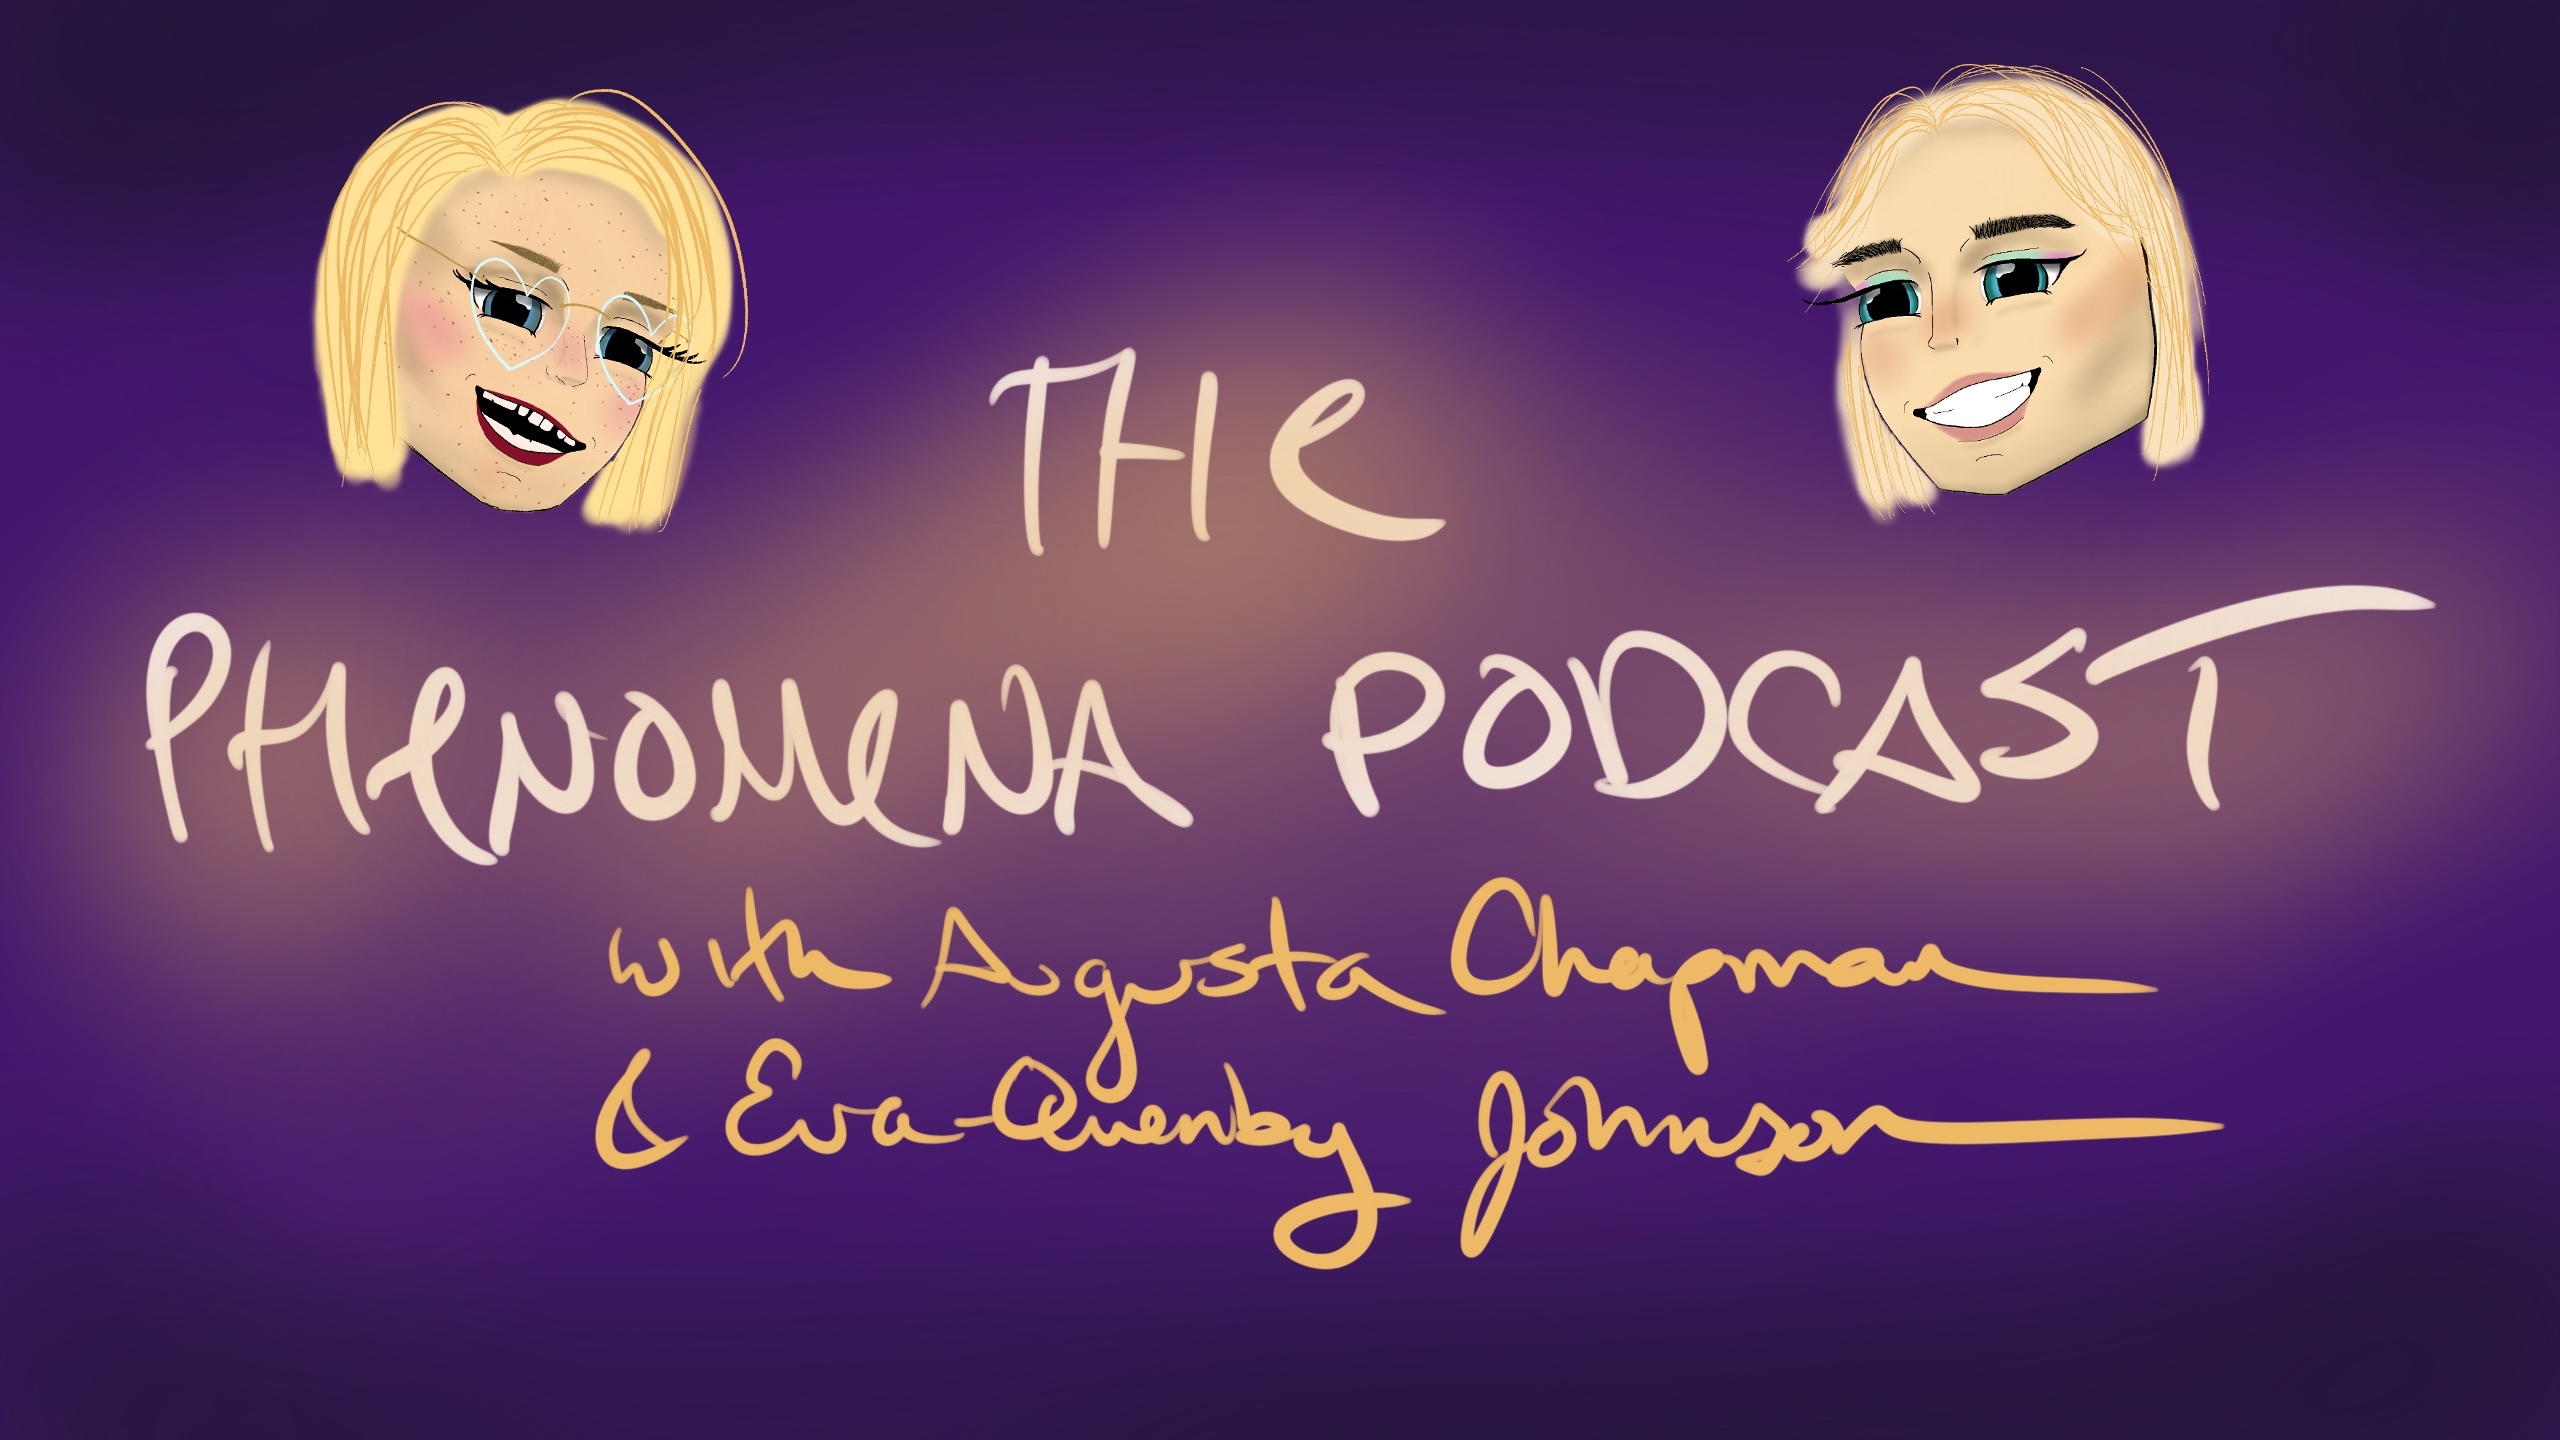 The Phenomena Podcast with Augusta Chapman